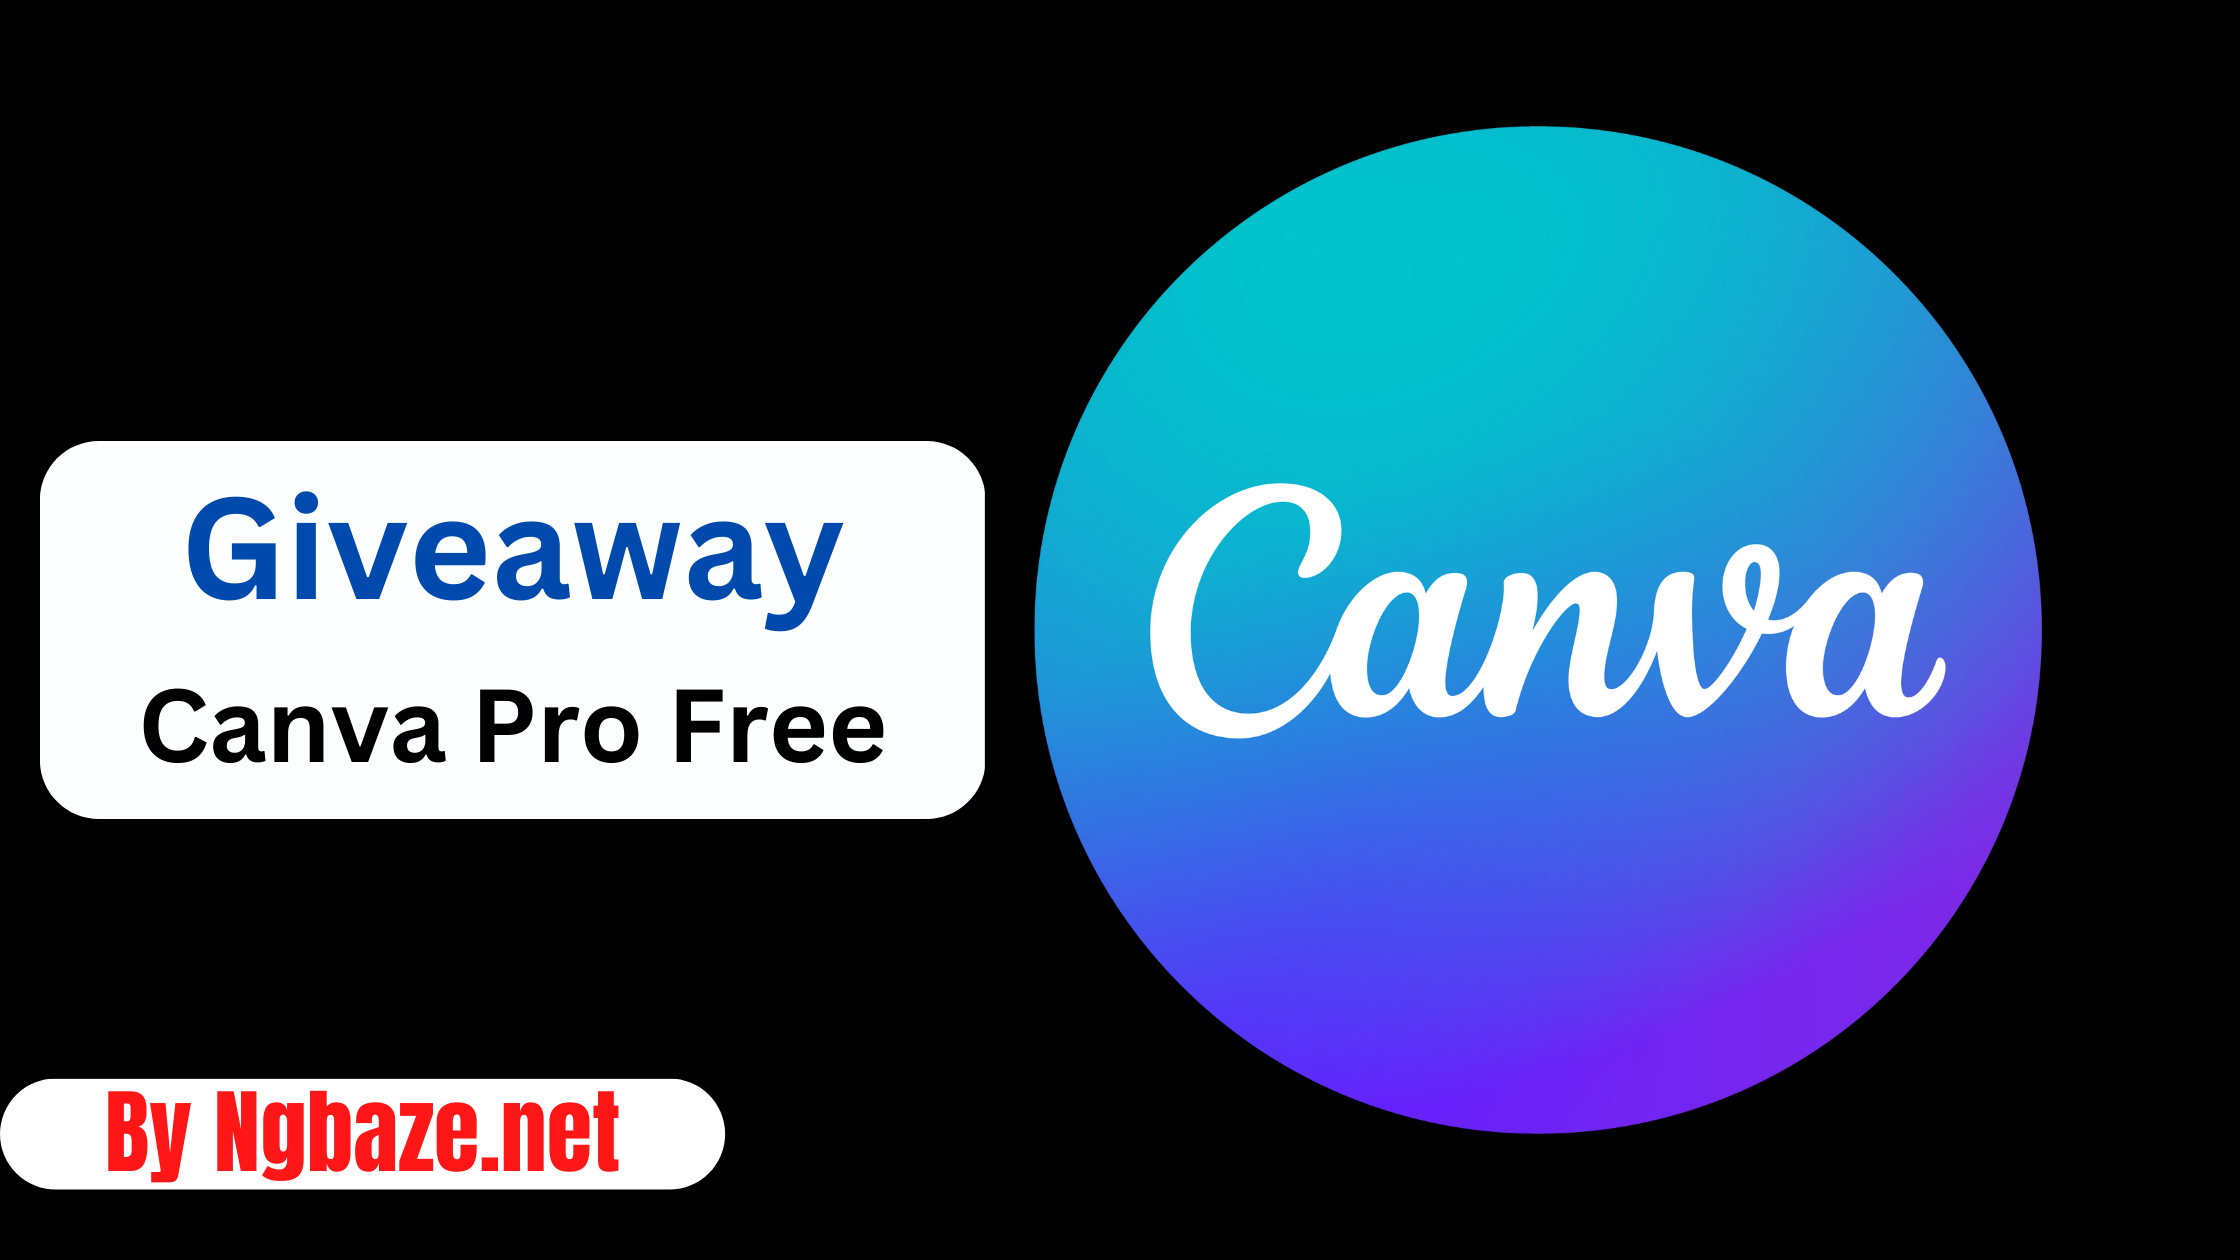 Free-Canva-Pro-Link-Lifetime--No-Credit-Card-.png